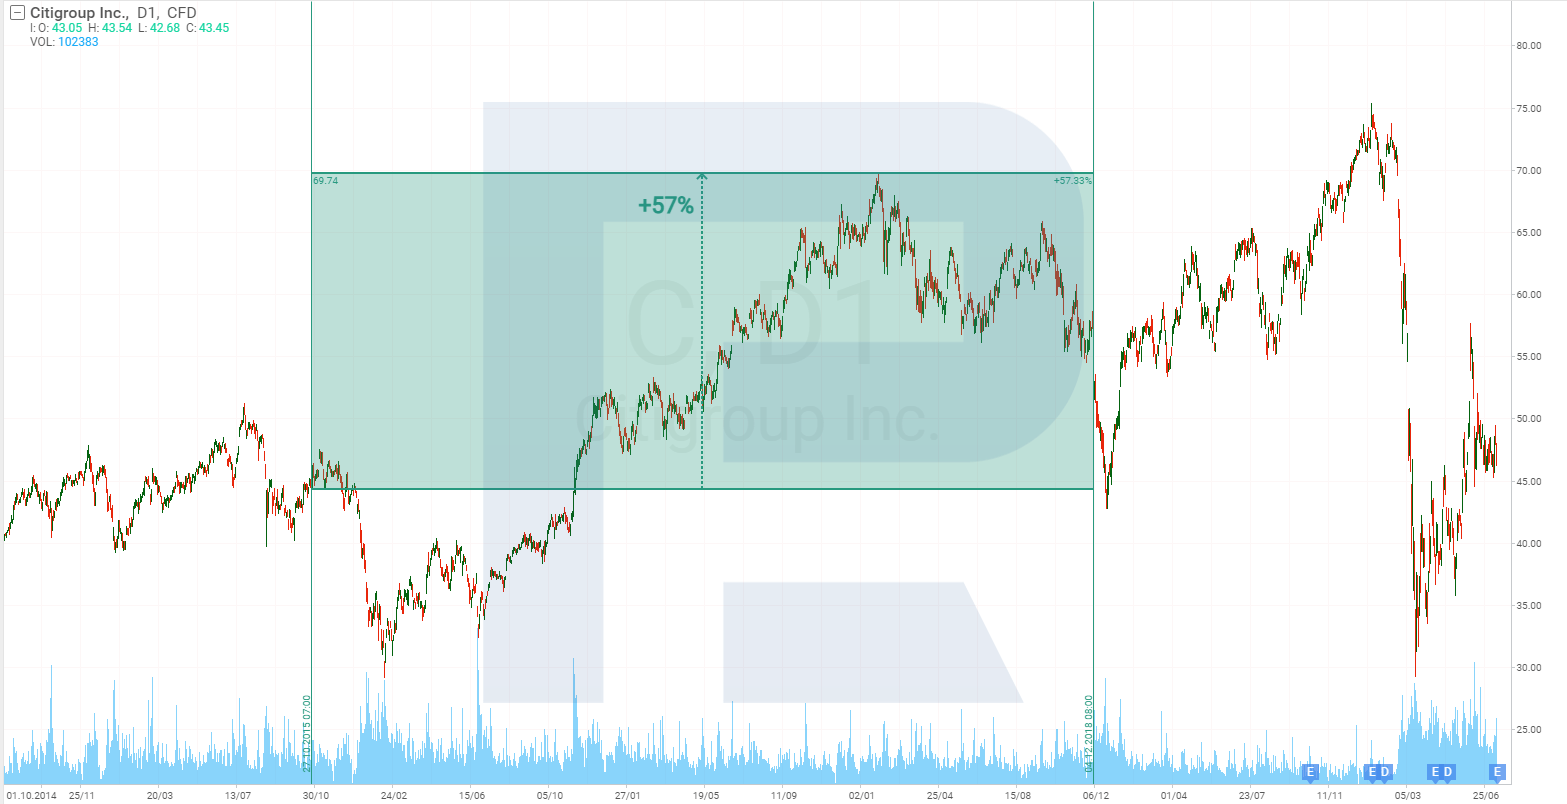 Citigroup Inc. stock chart